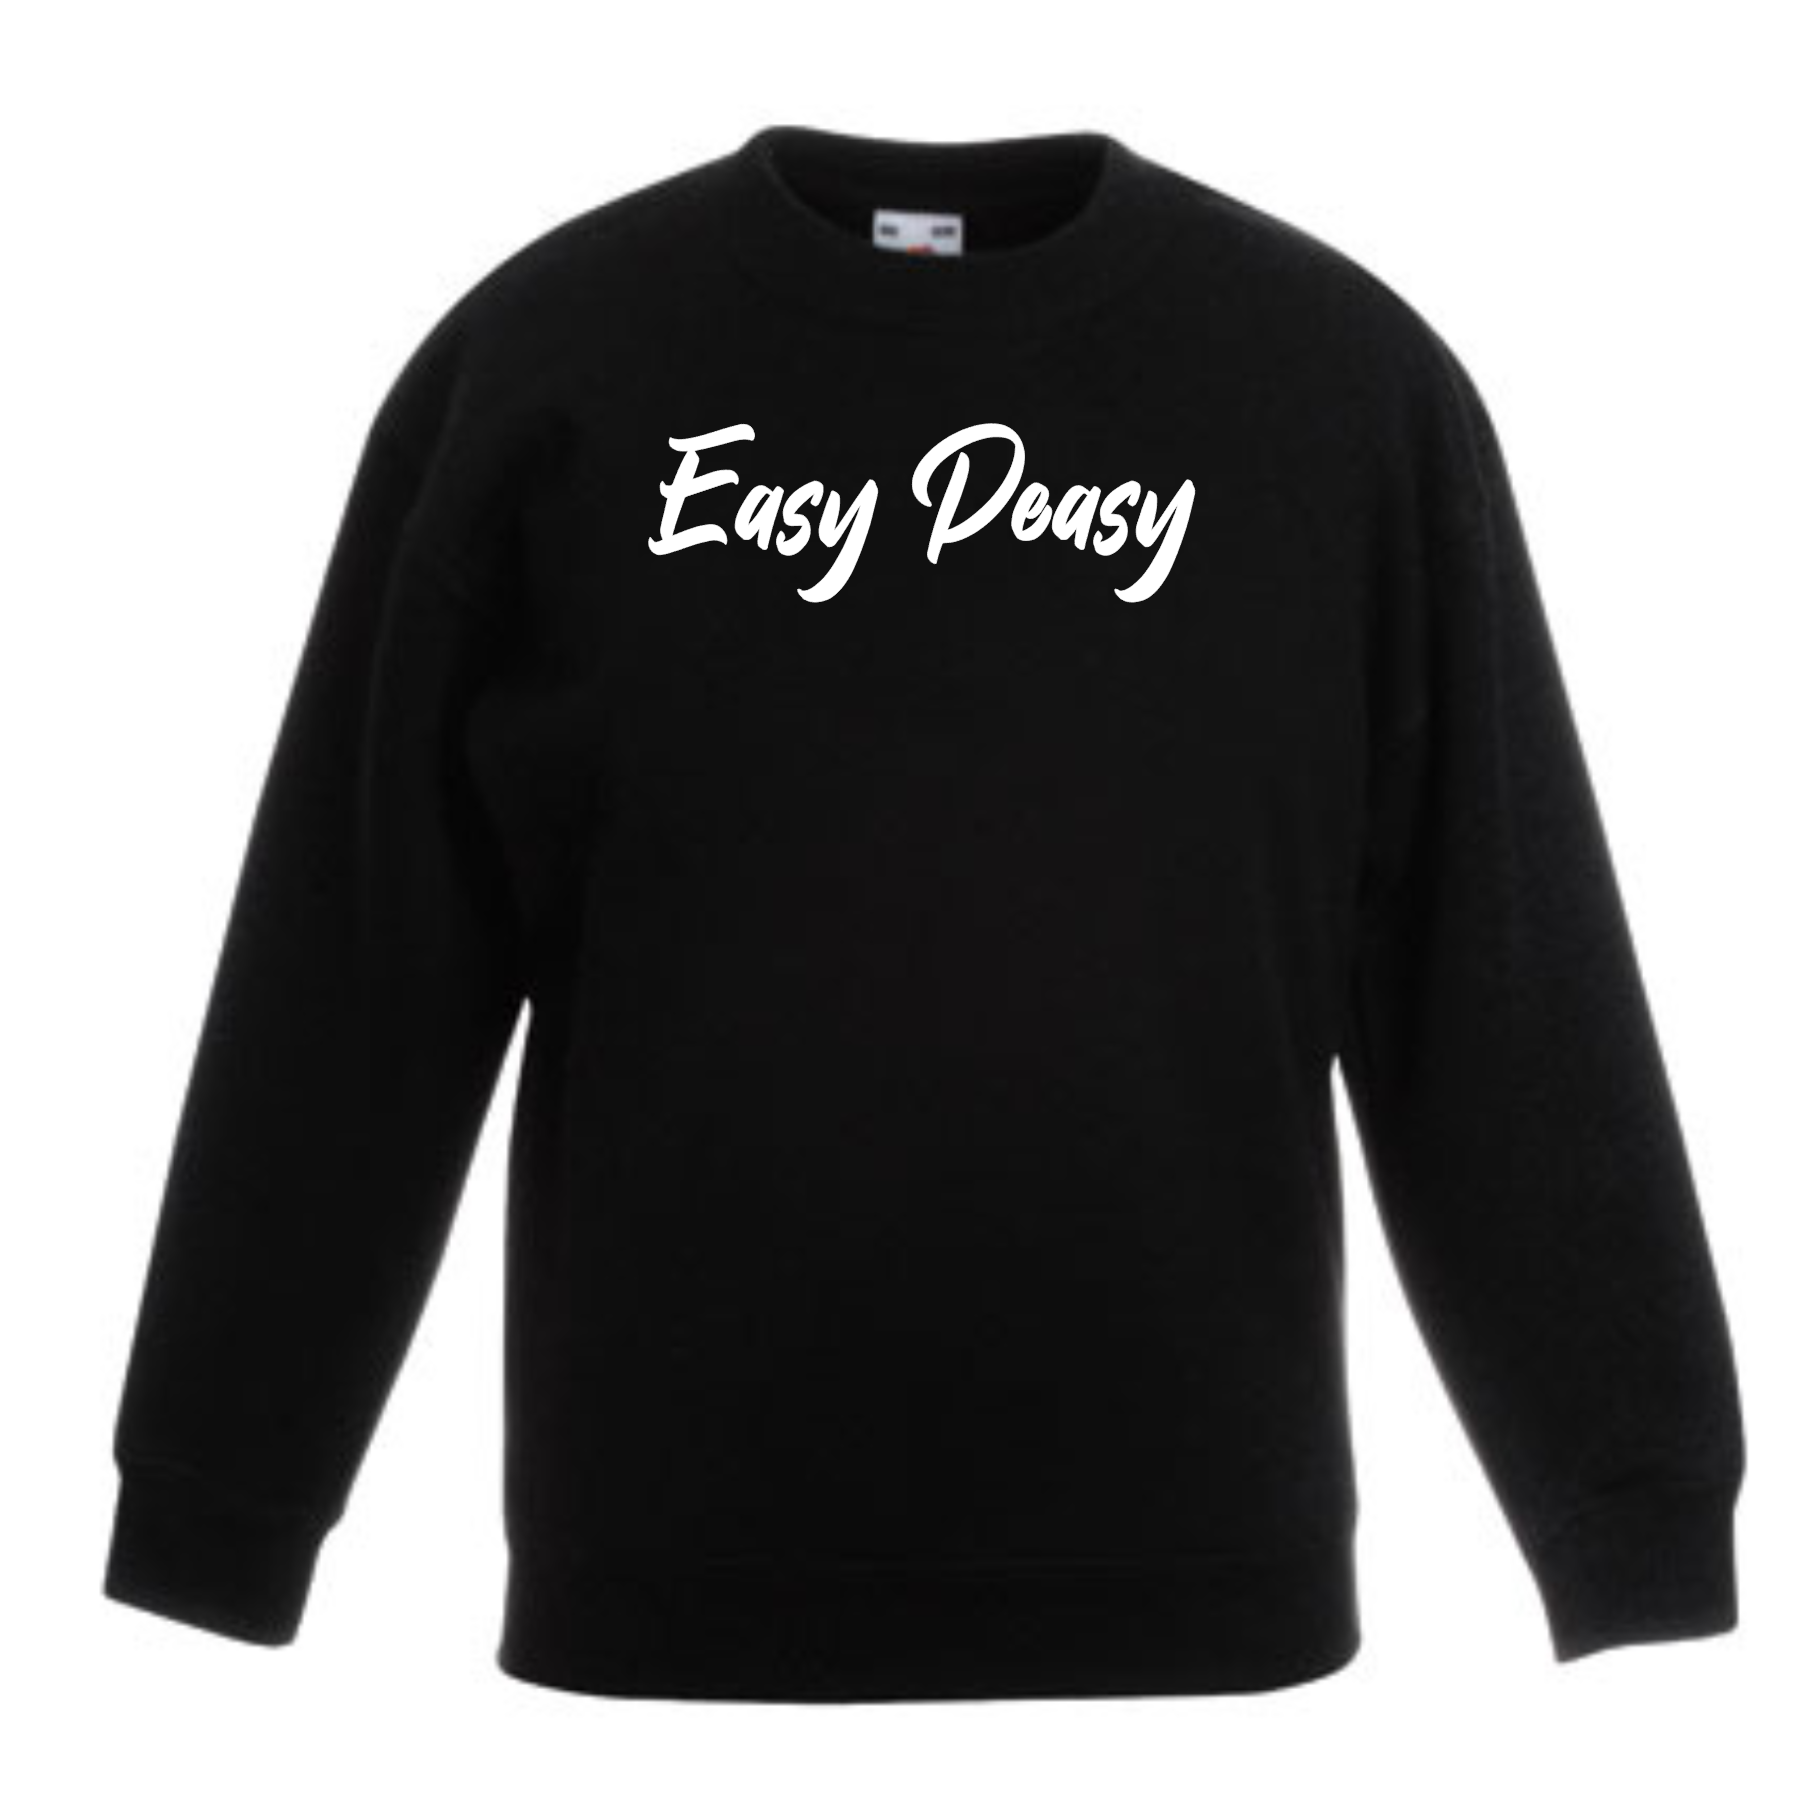 Kids sweater – Easy peasy